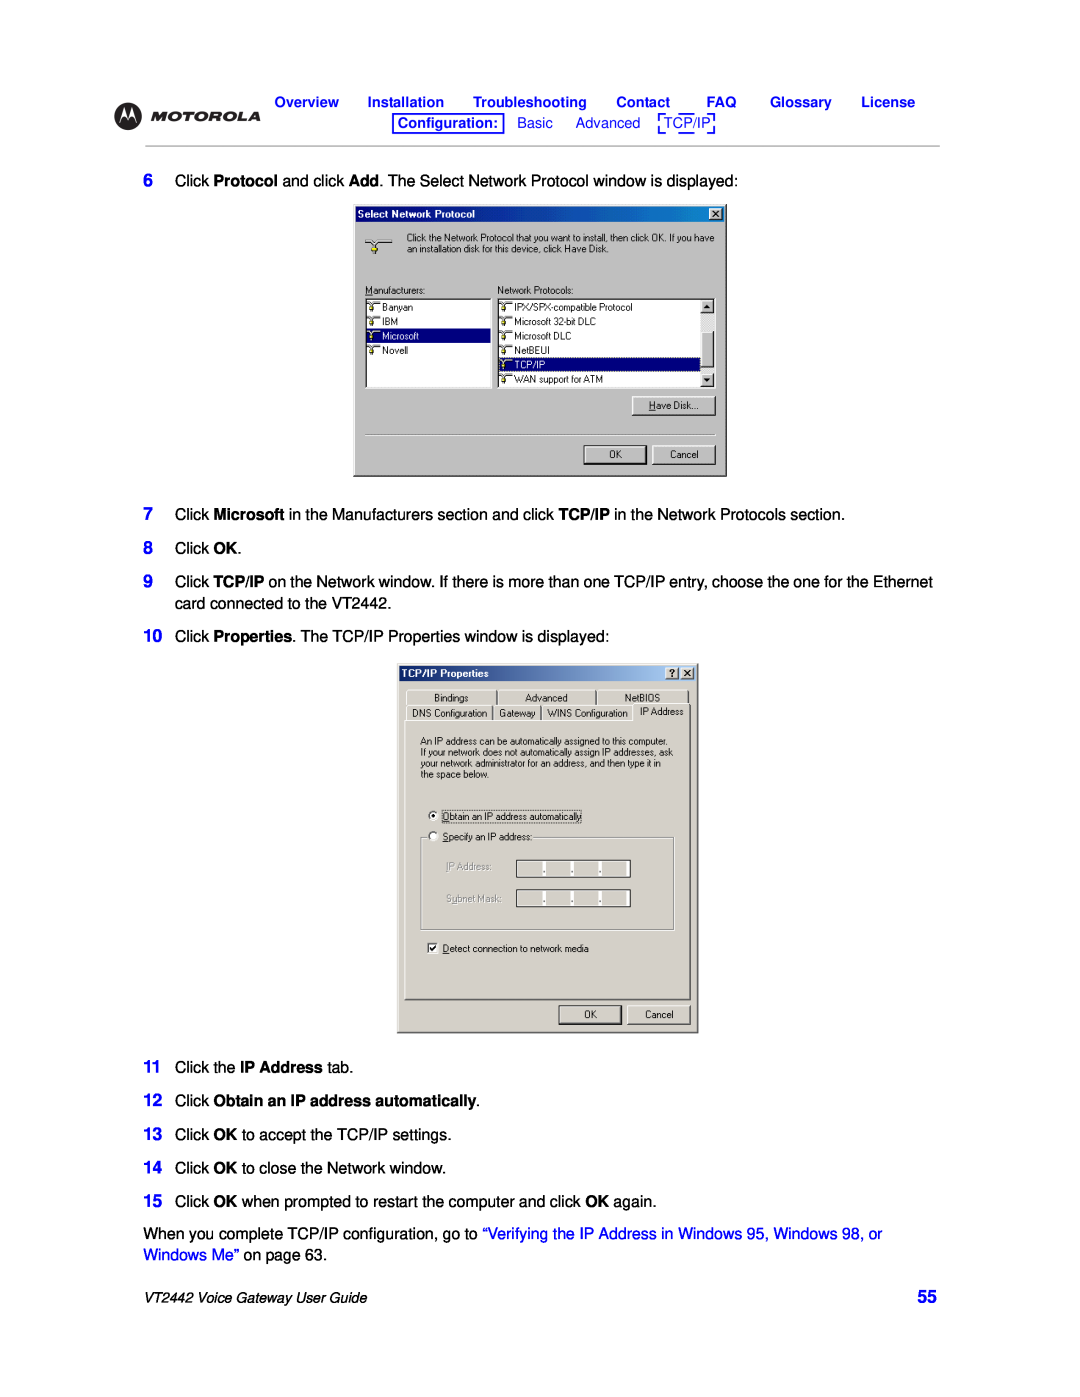 Motorola VT2442 manual Click Obtain an IP address automatically 